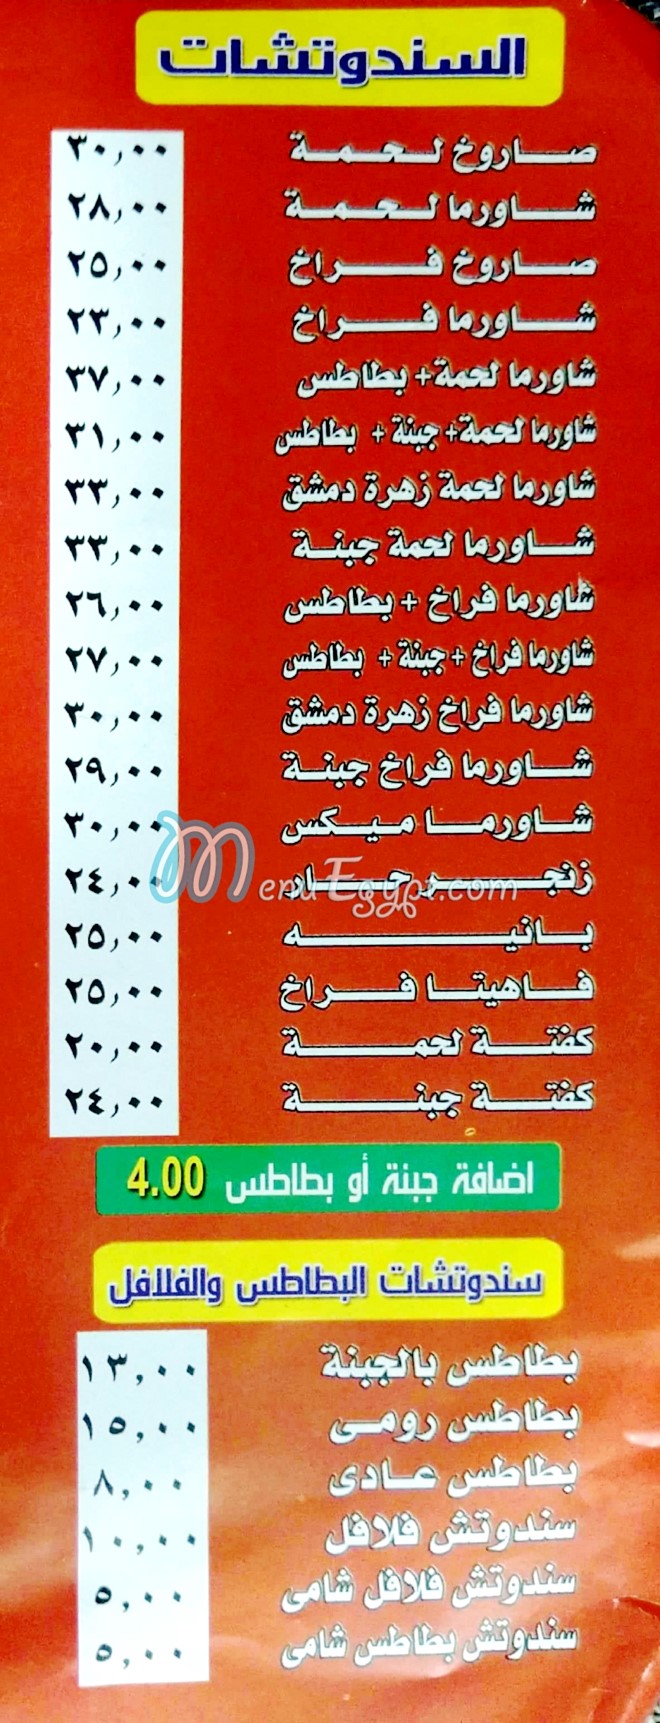 Shawarma Abu Yzn El Sory menu Egypt